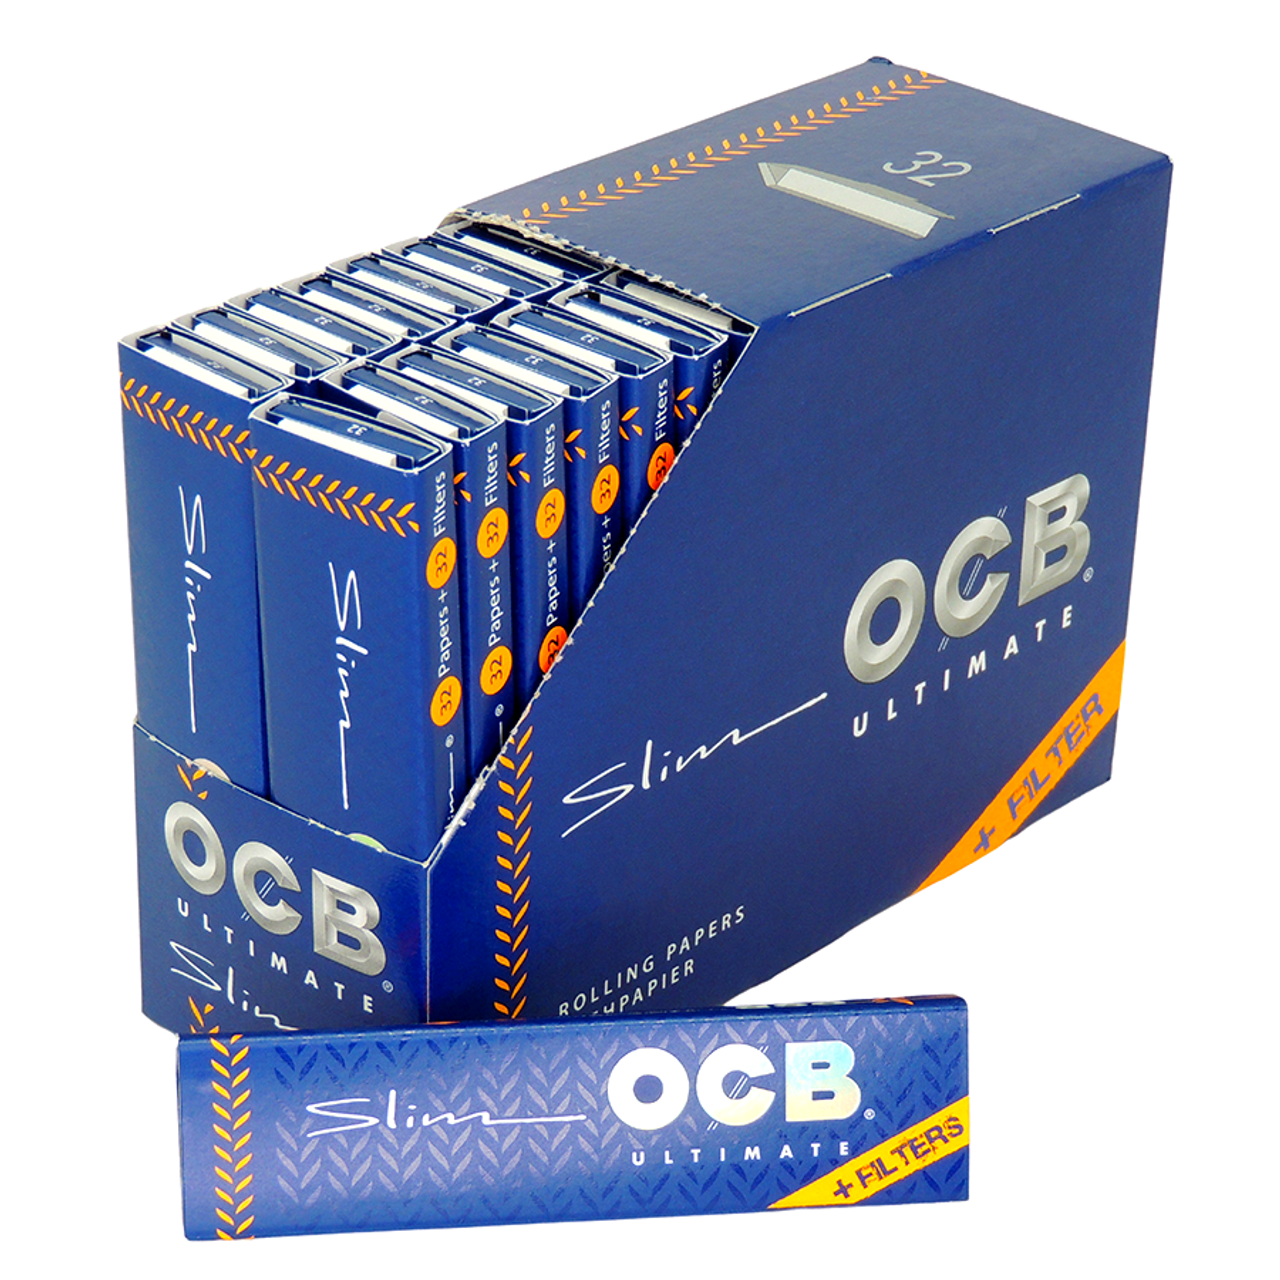 OCB cardboard filters - Toncar OCB cheap - Delivered 24-72h